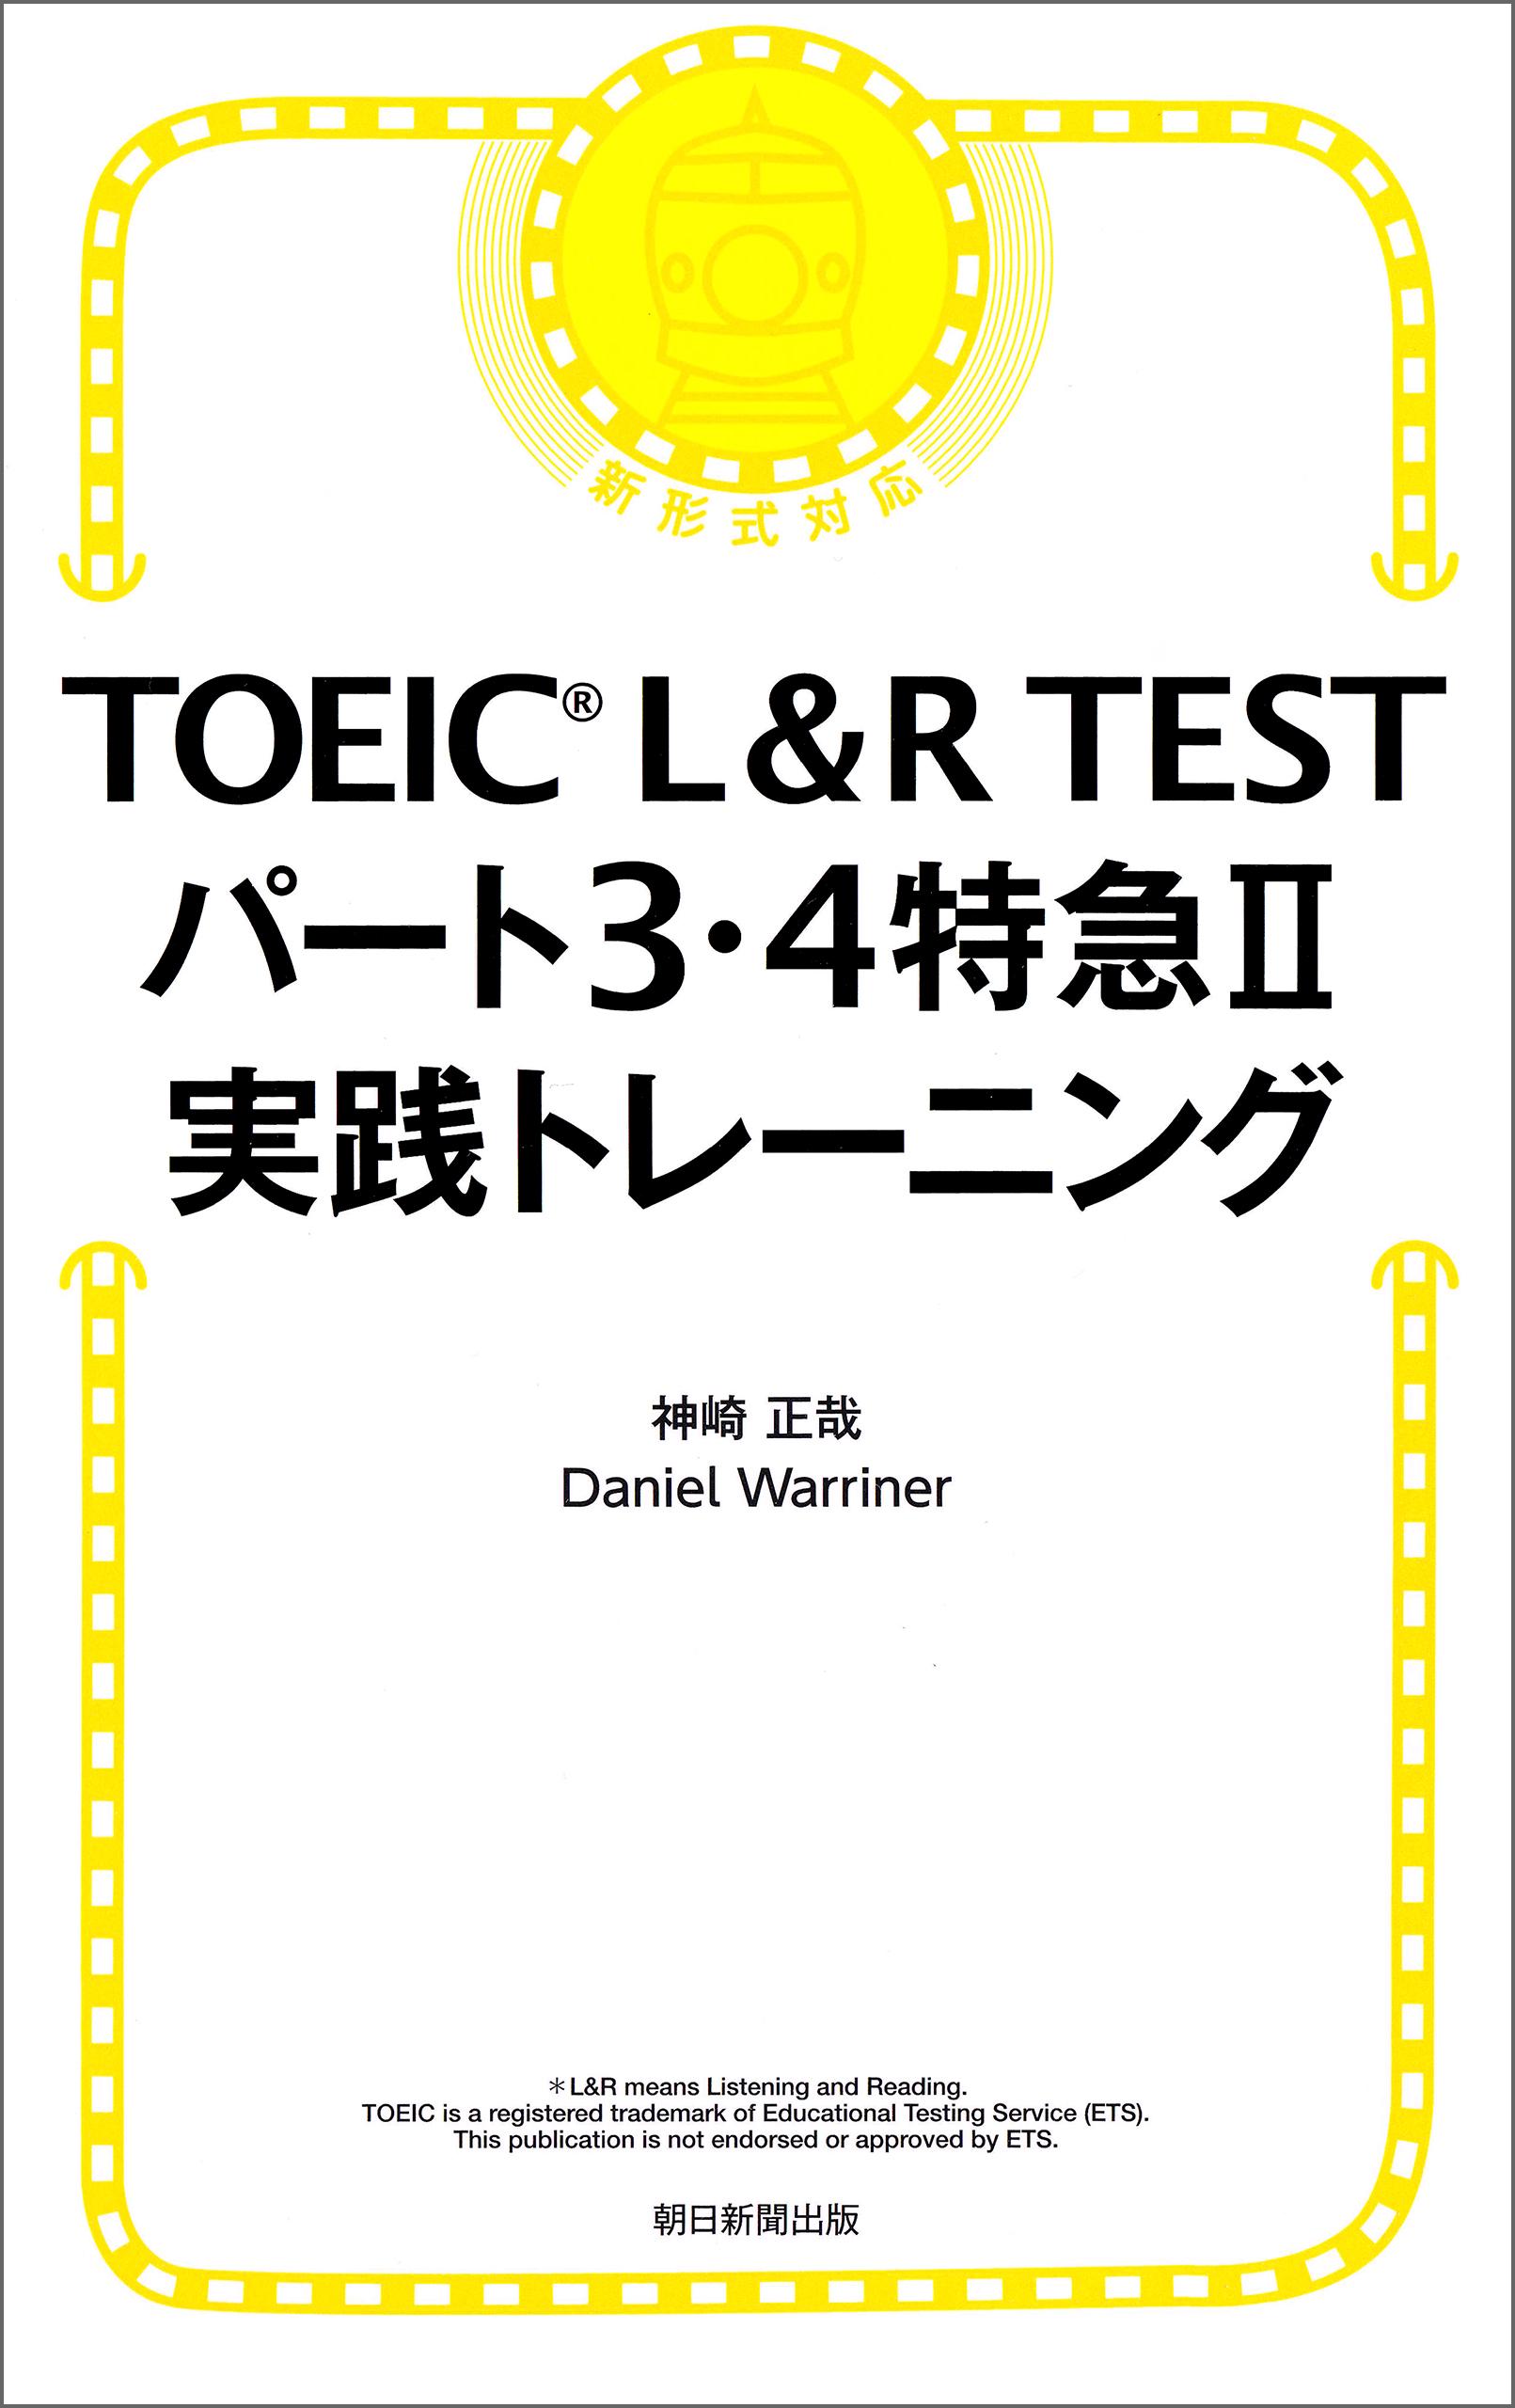 TOEIC L&R TEST パート3・4特急II　実践トレーニング